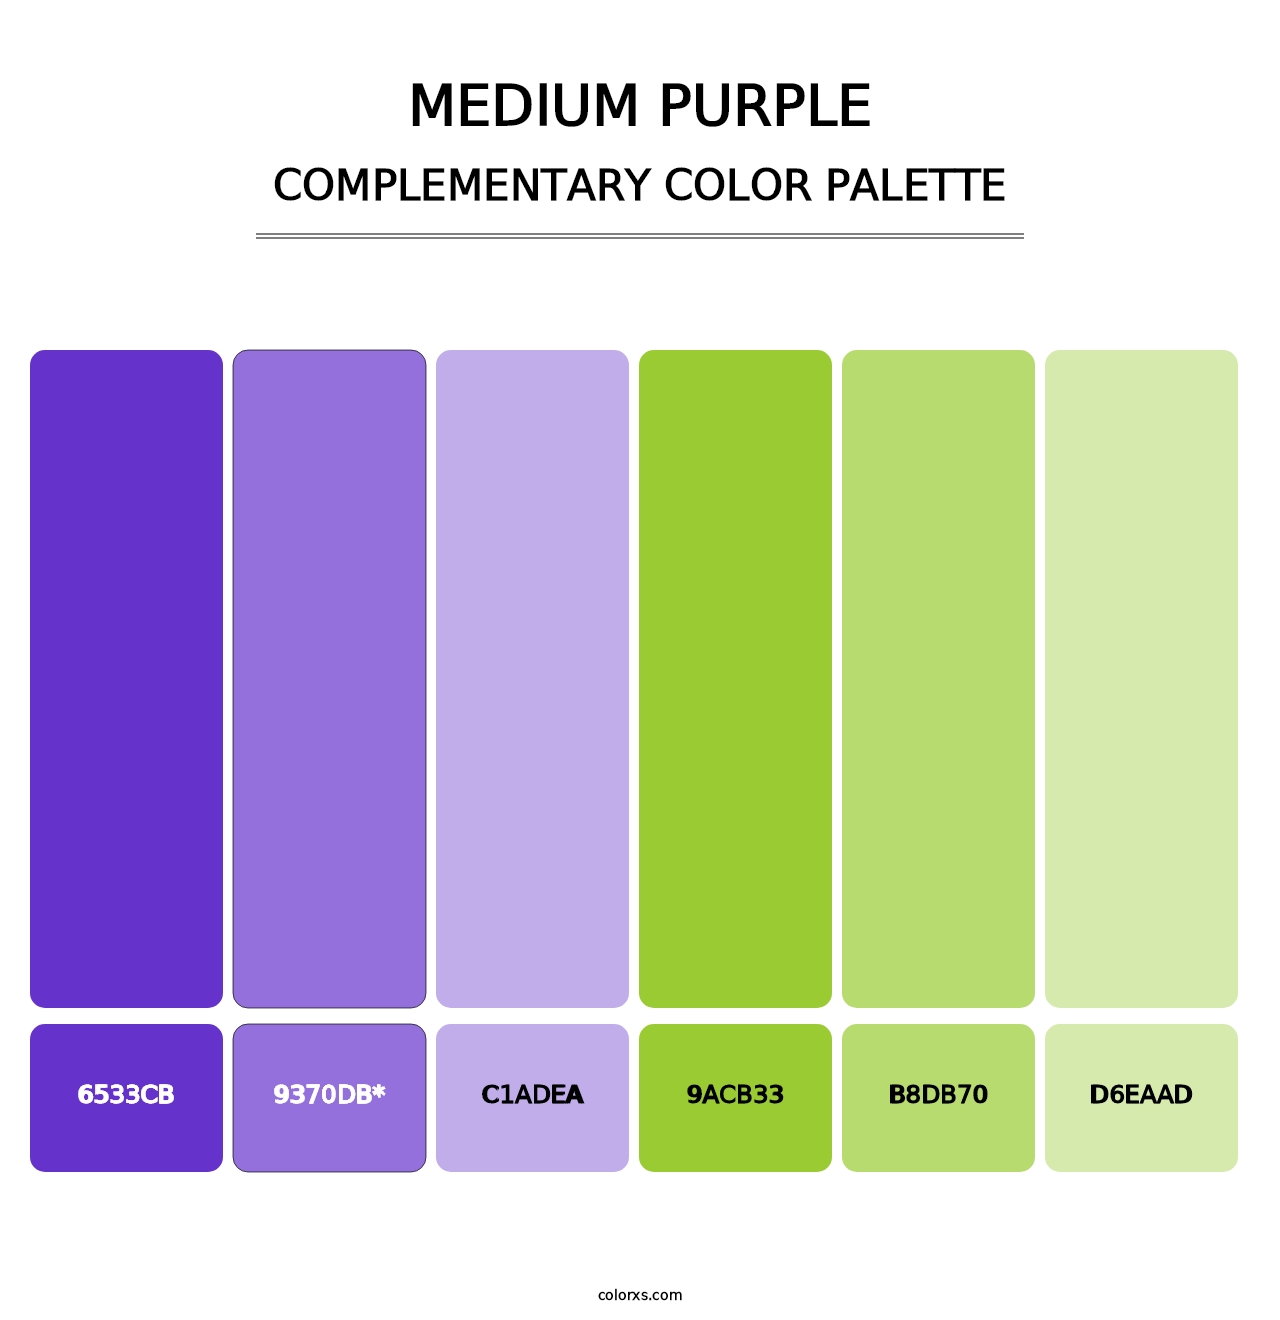 Medium Purple - Complementary Color Palette